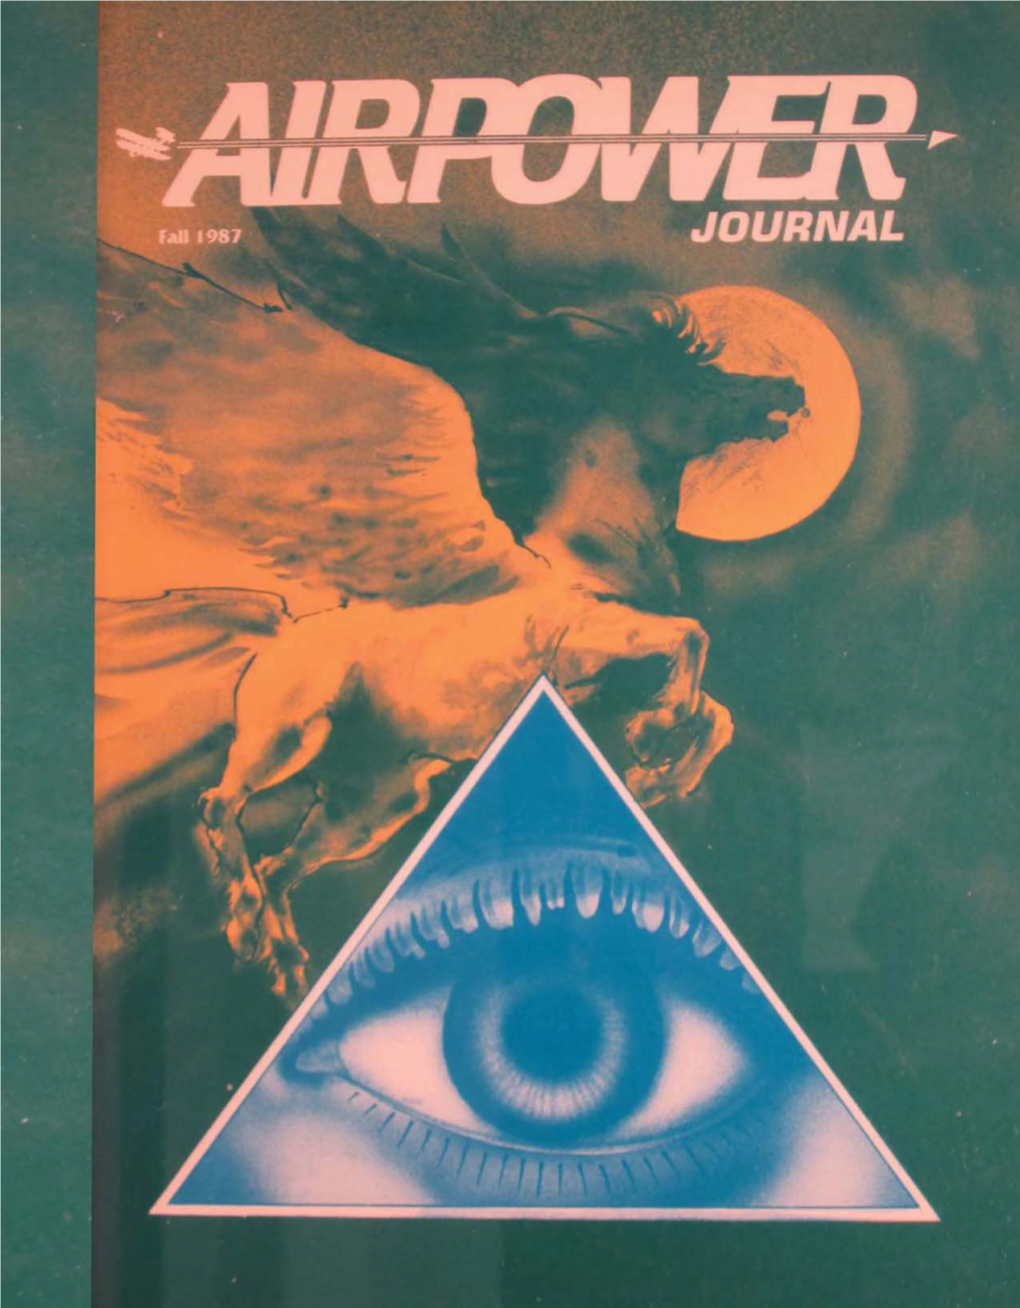 Airpower Journal: Fall 1987, Volume I, No. 2